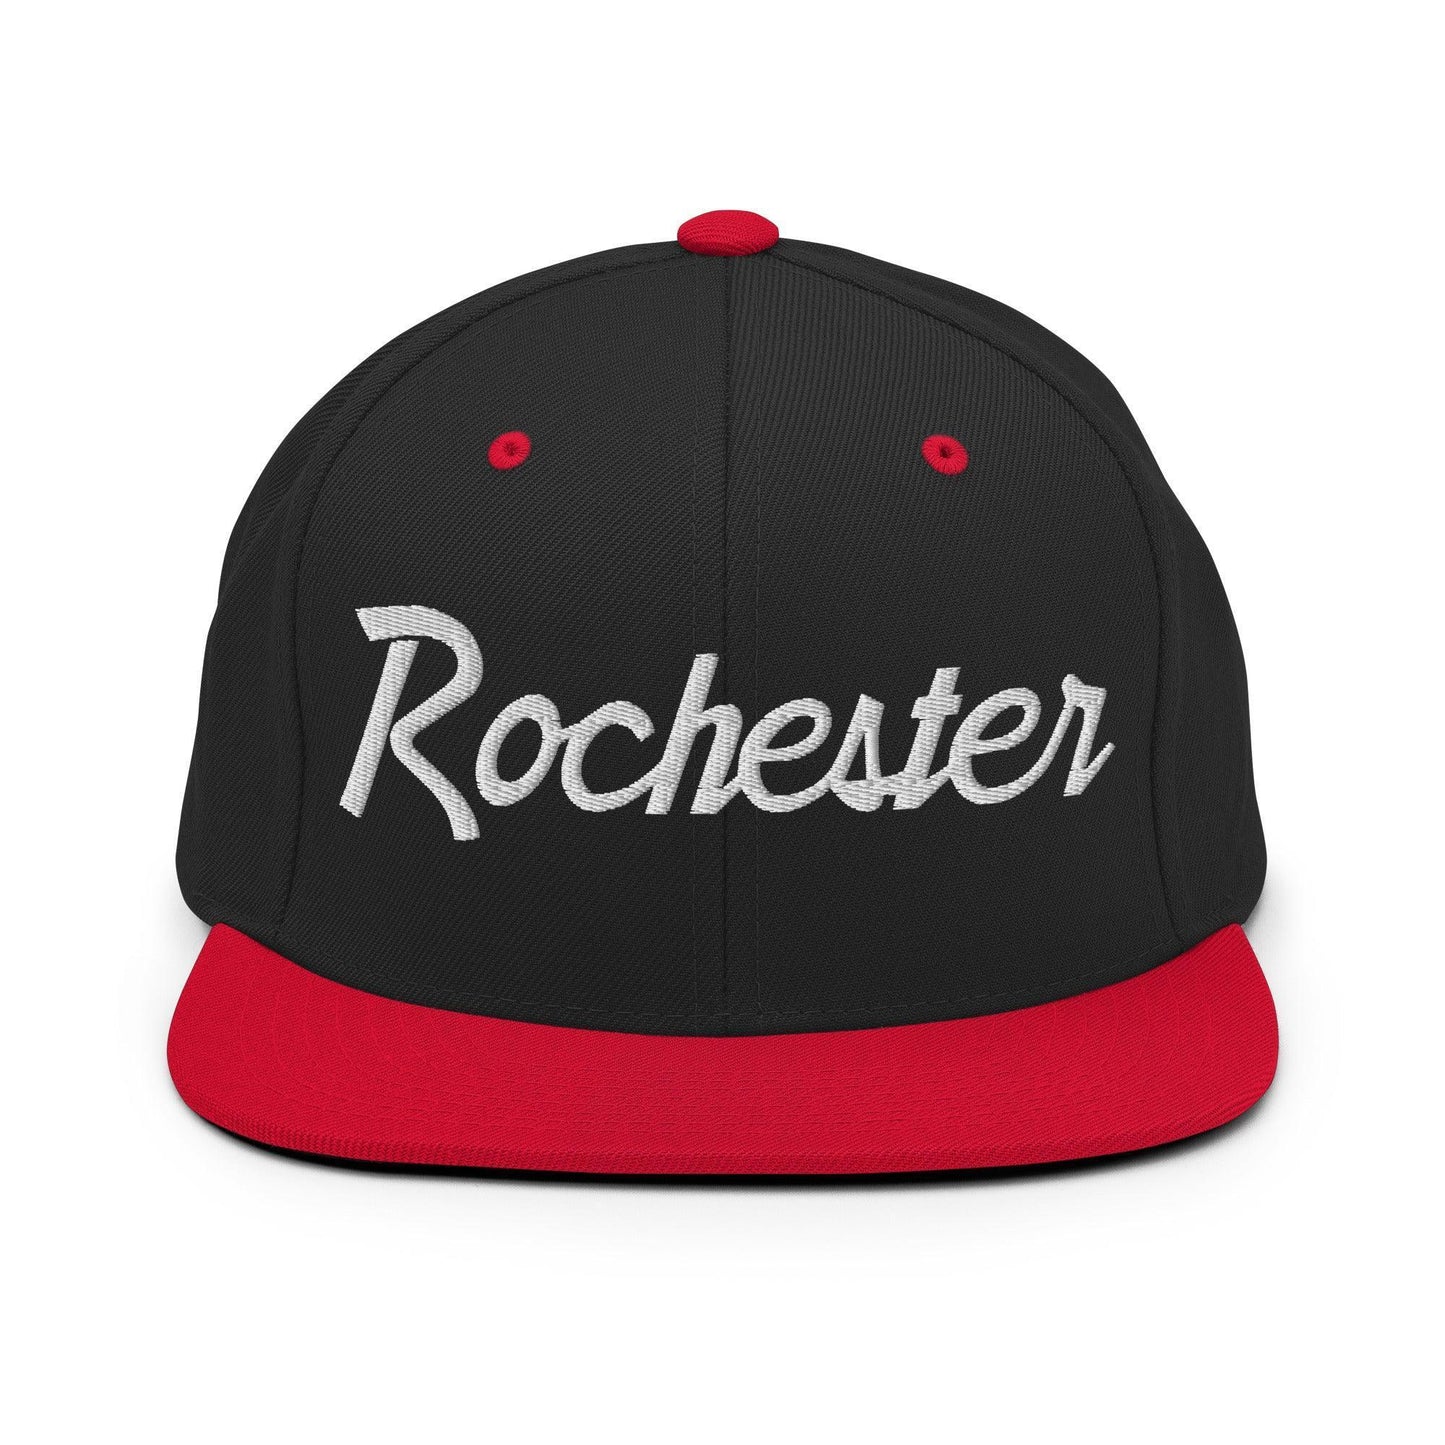 Rochester Script Snapback Hat Black Red